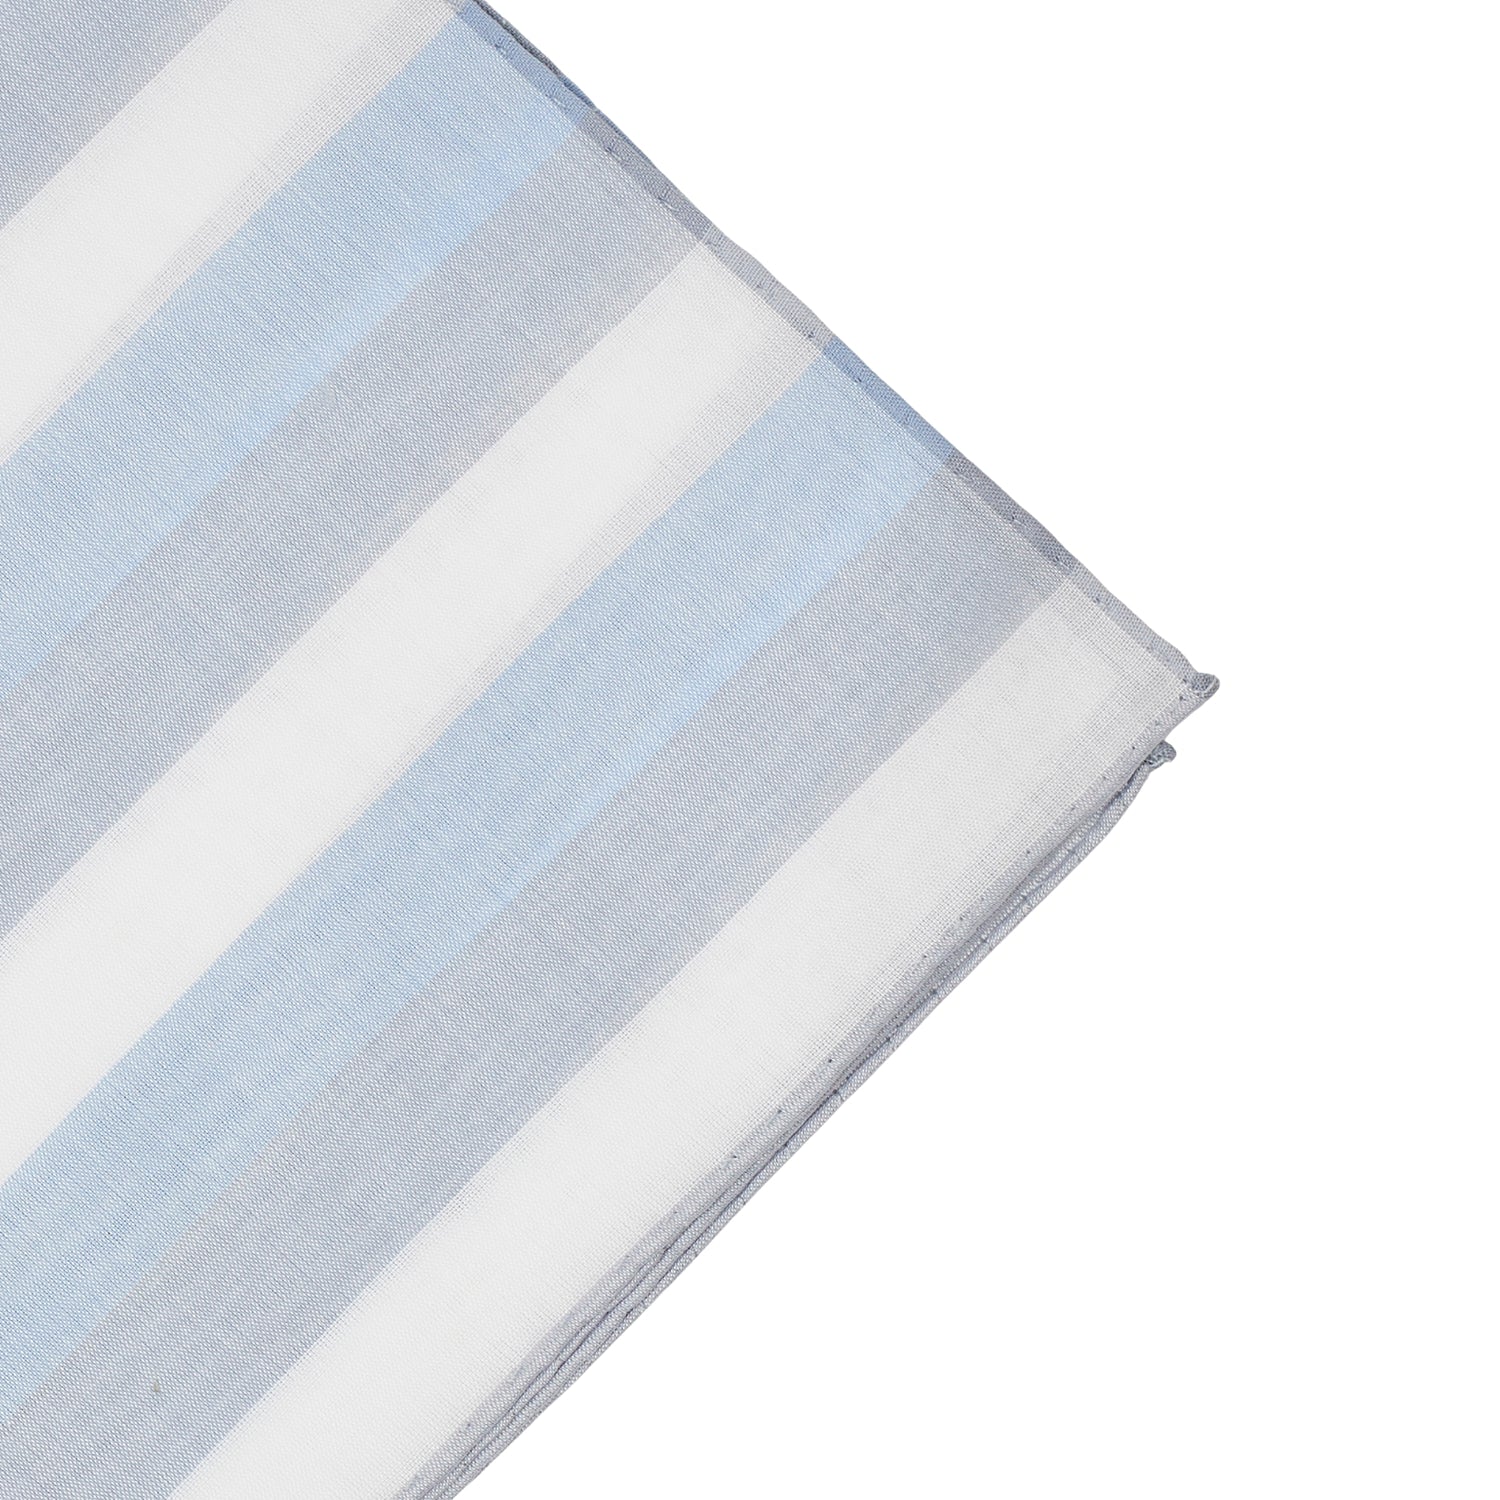 Simonnot Godard White Blue & Grey Striped Cotton Pocket Square